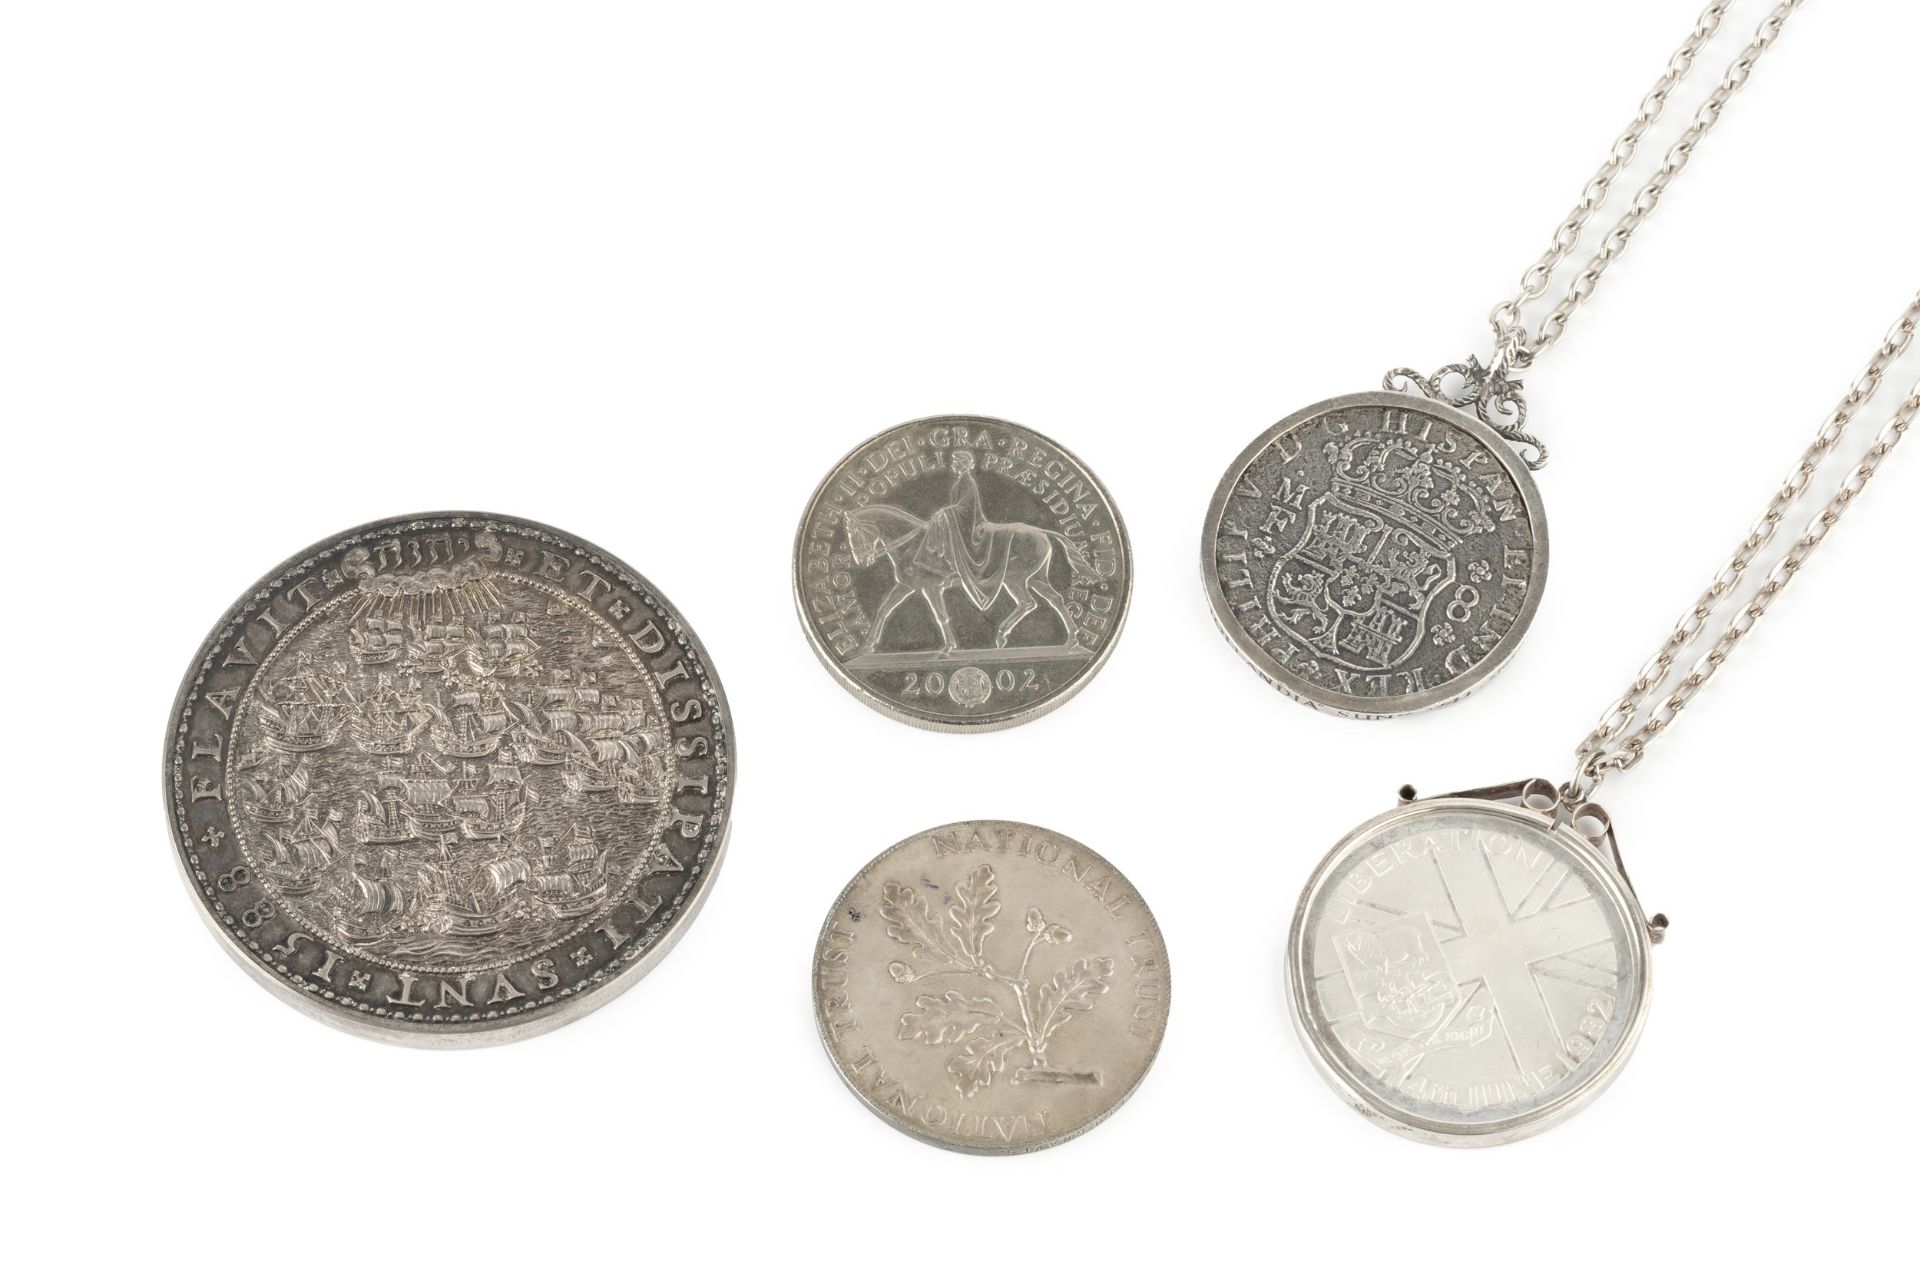 A silver Spanish Armada 400th anniversary medal, 1988, cased, a silver 'Hollandia' treasure coin